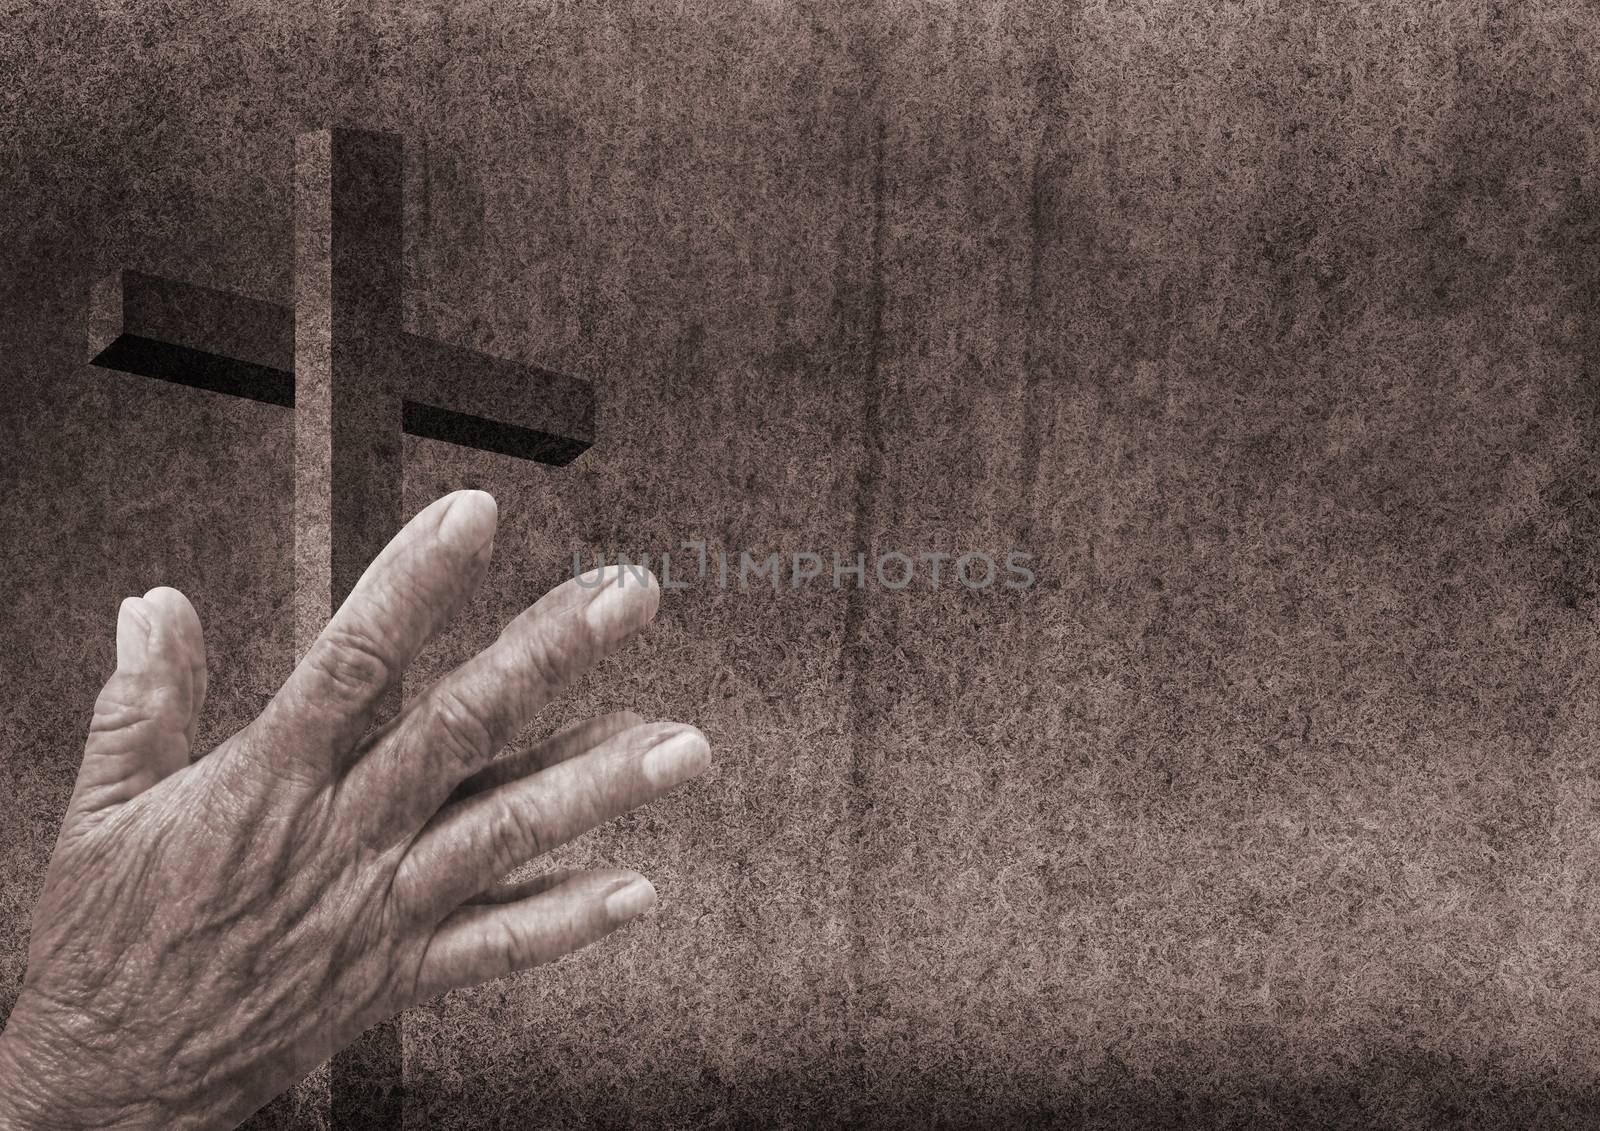 Praying hands and christian cross